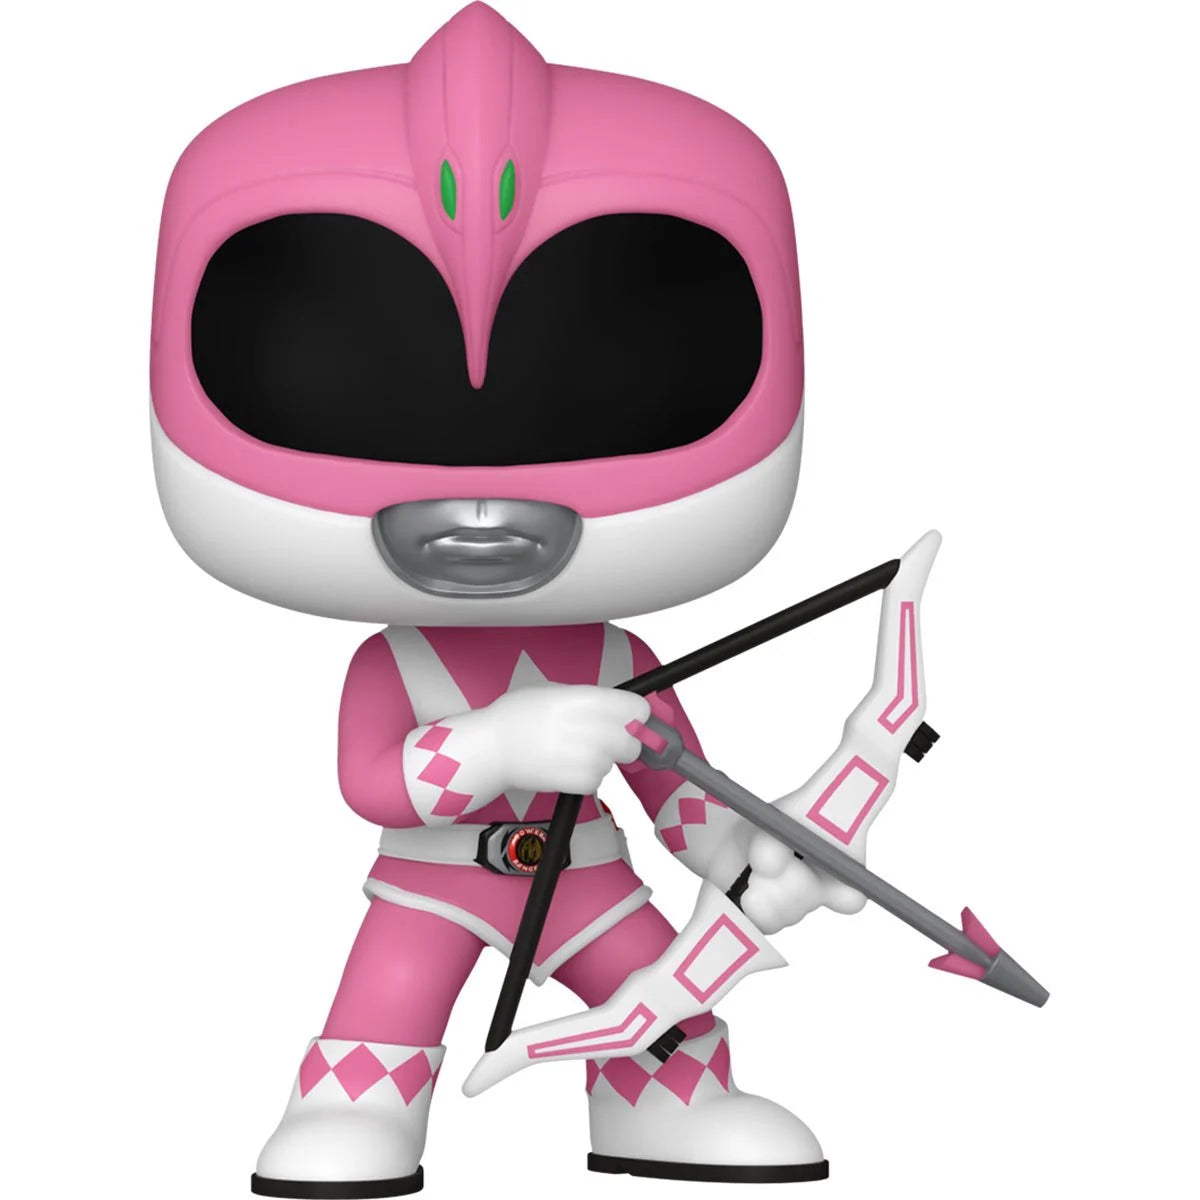 Funko Pop TV: Mighty Morphin Power Rangers 30 Aniversario - Pink Ranger